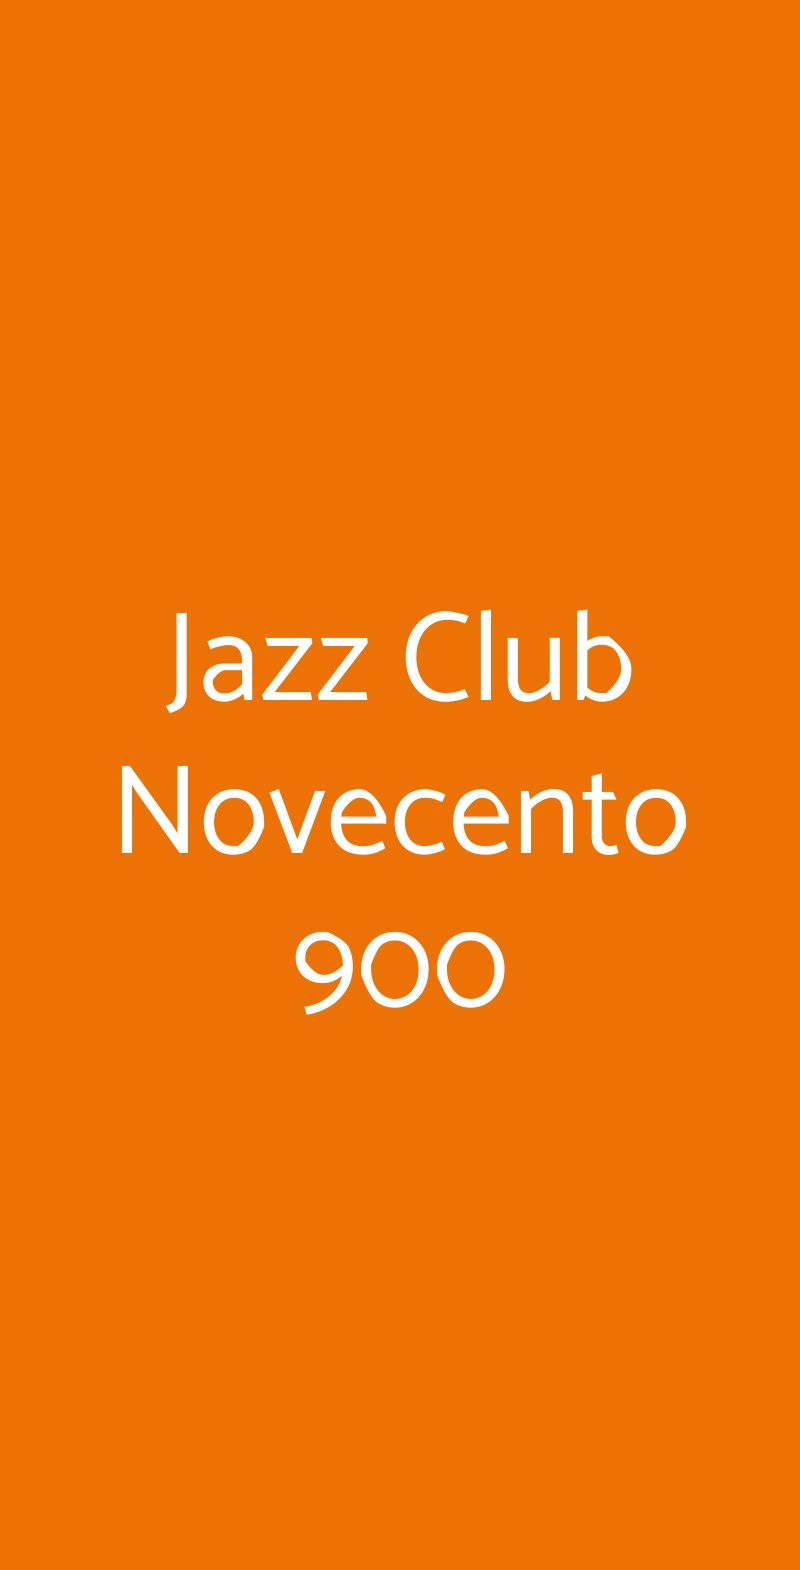 Jazz Club Novecento 900 Venezia menù 1 pagina